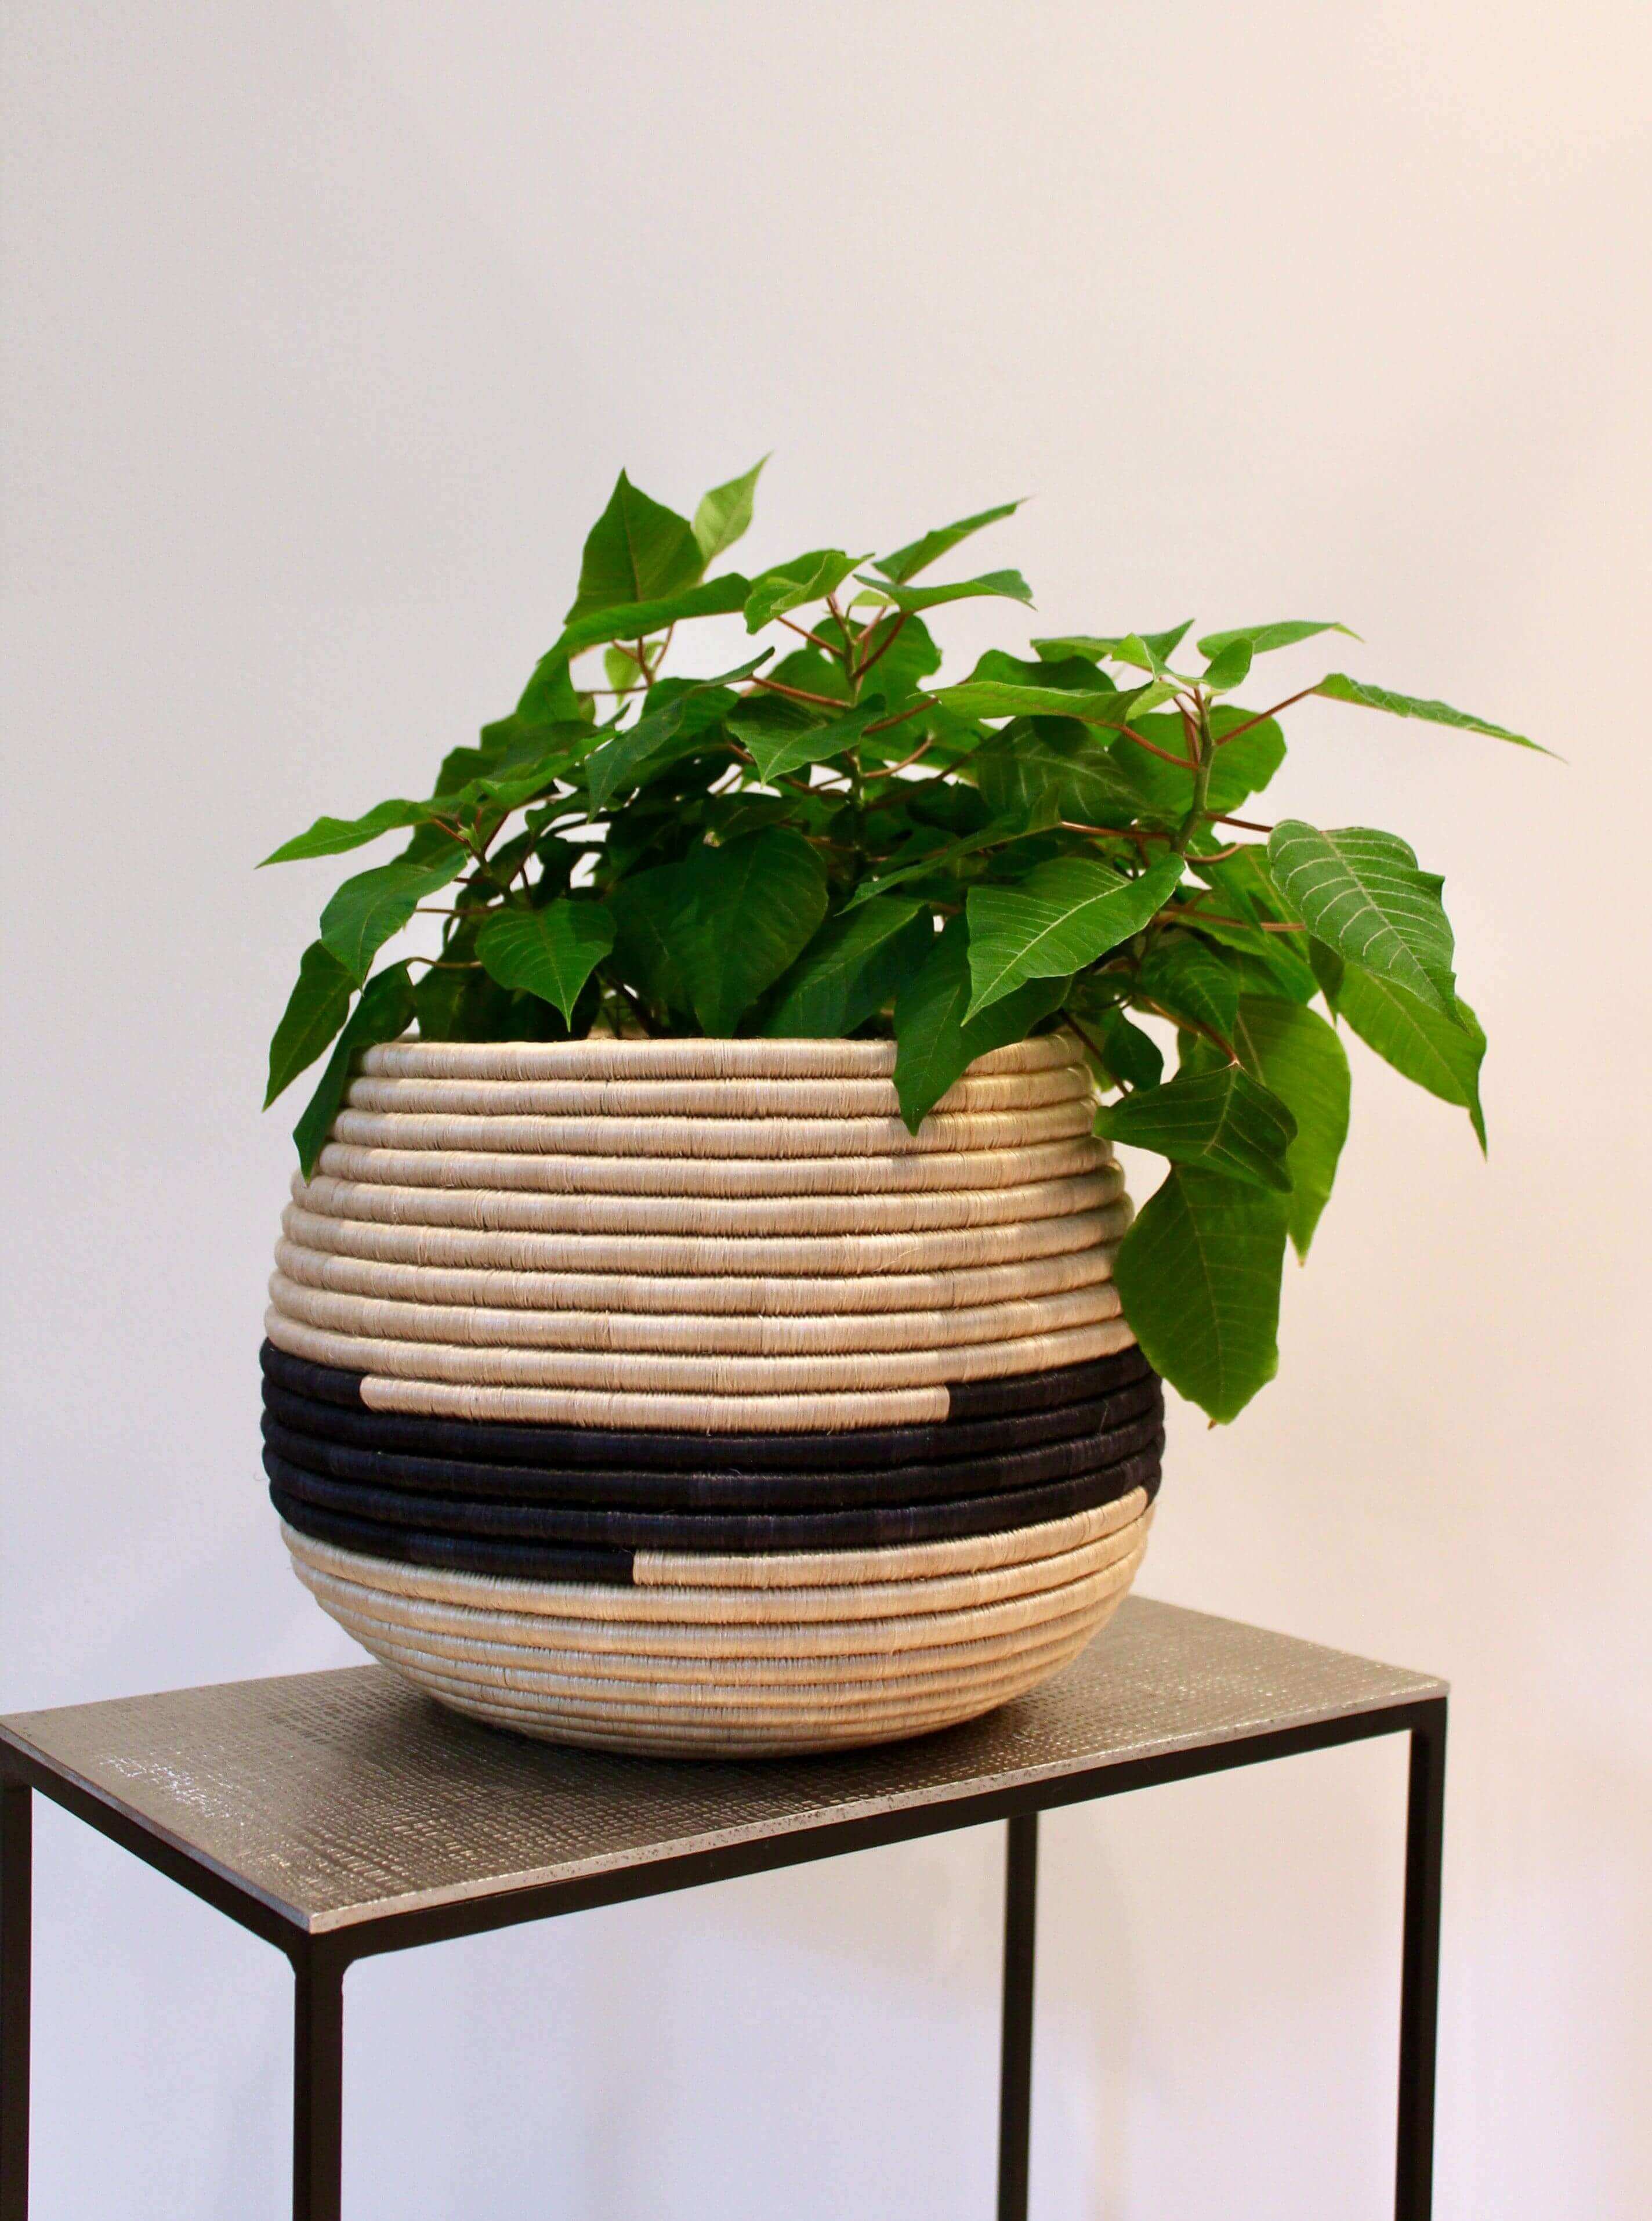 Fair trade handmade seagrass planter from Rwanda